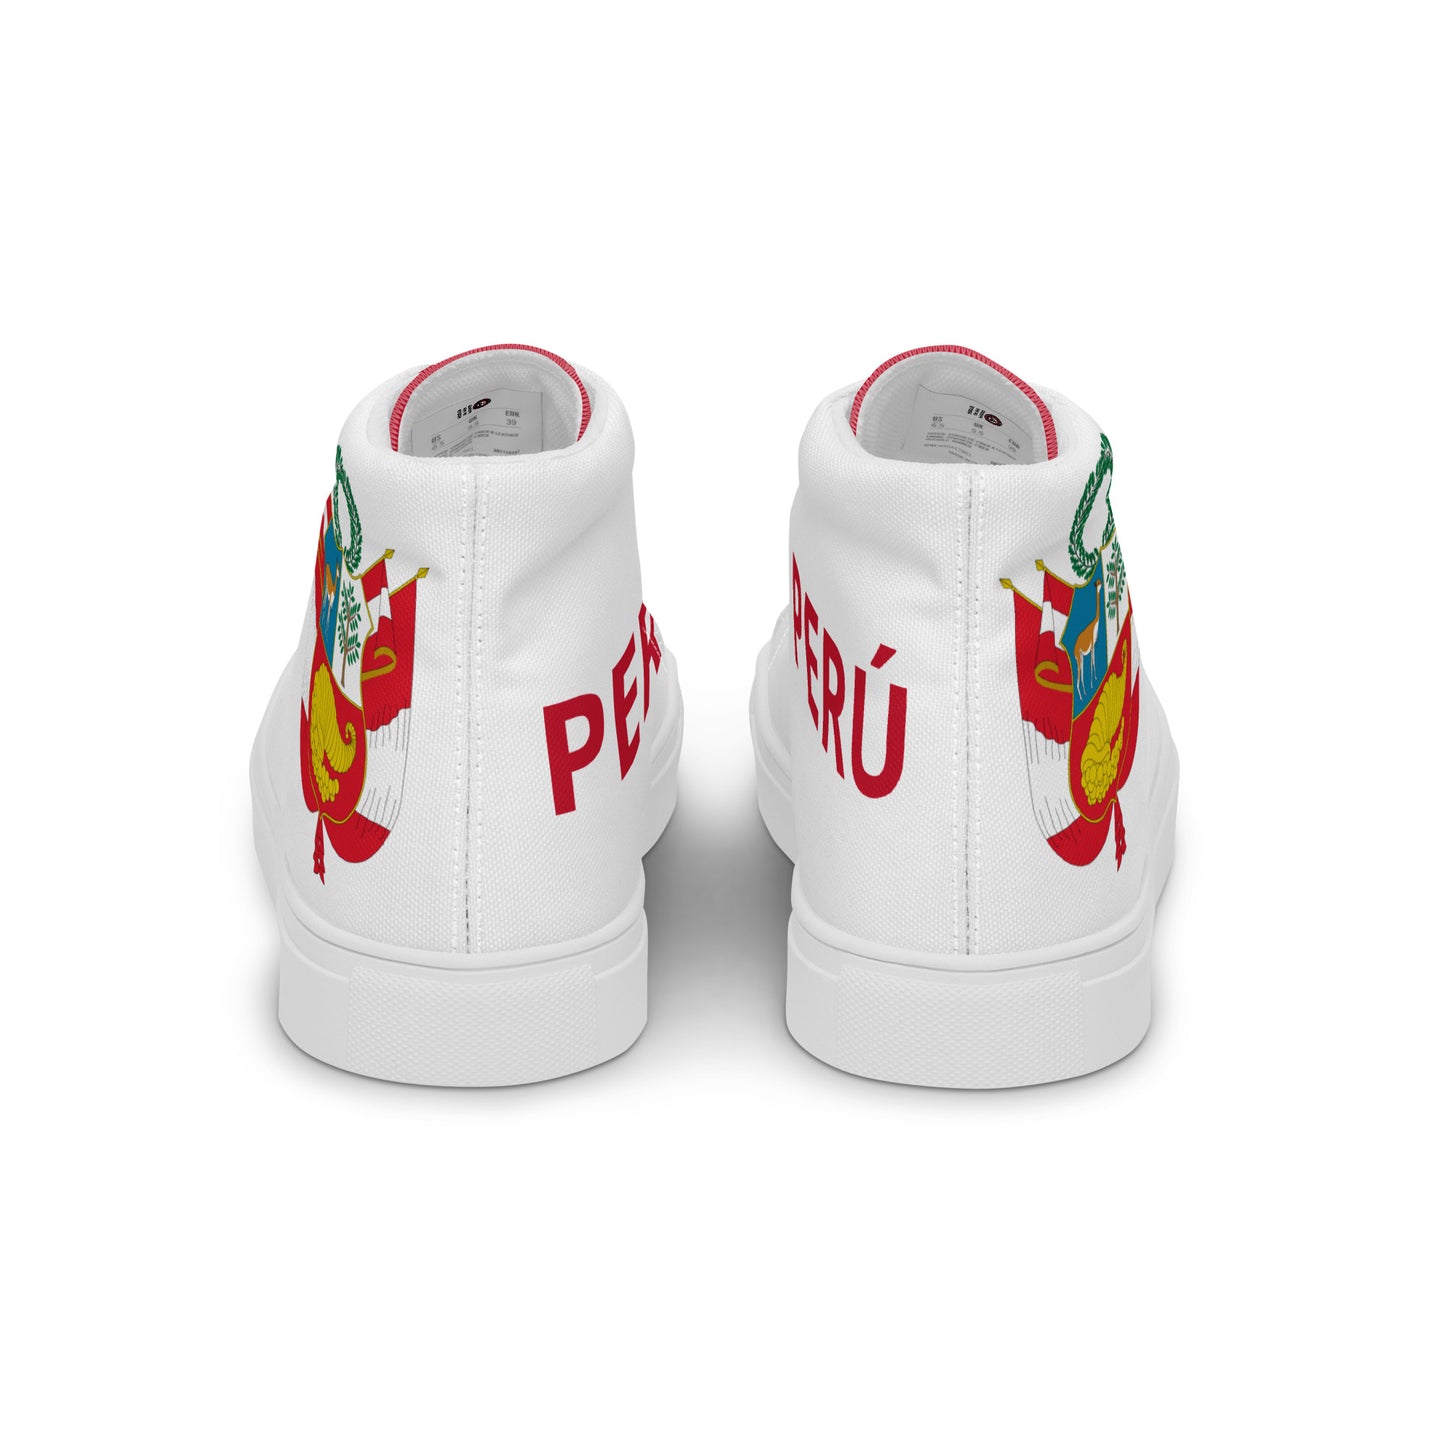 Perú - Men - White - High top shoes